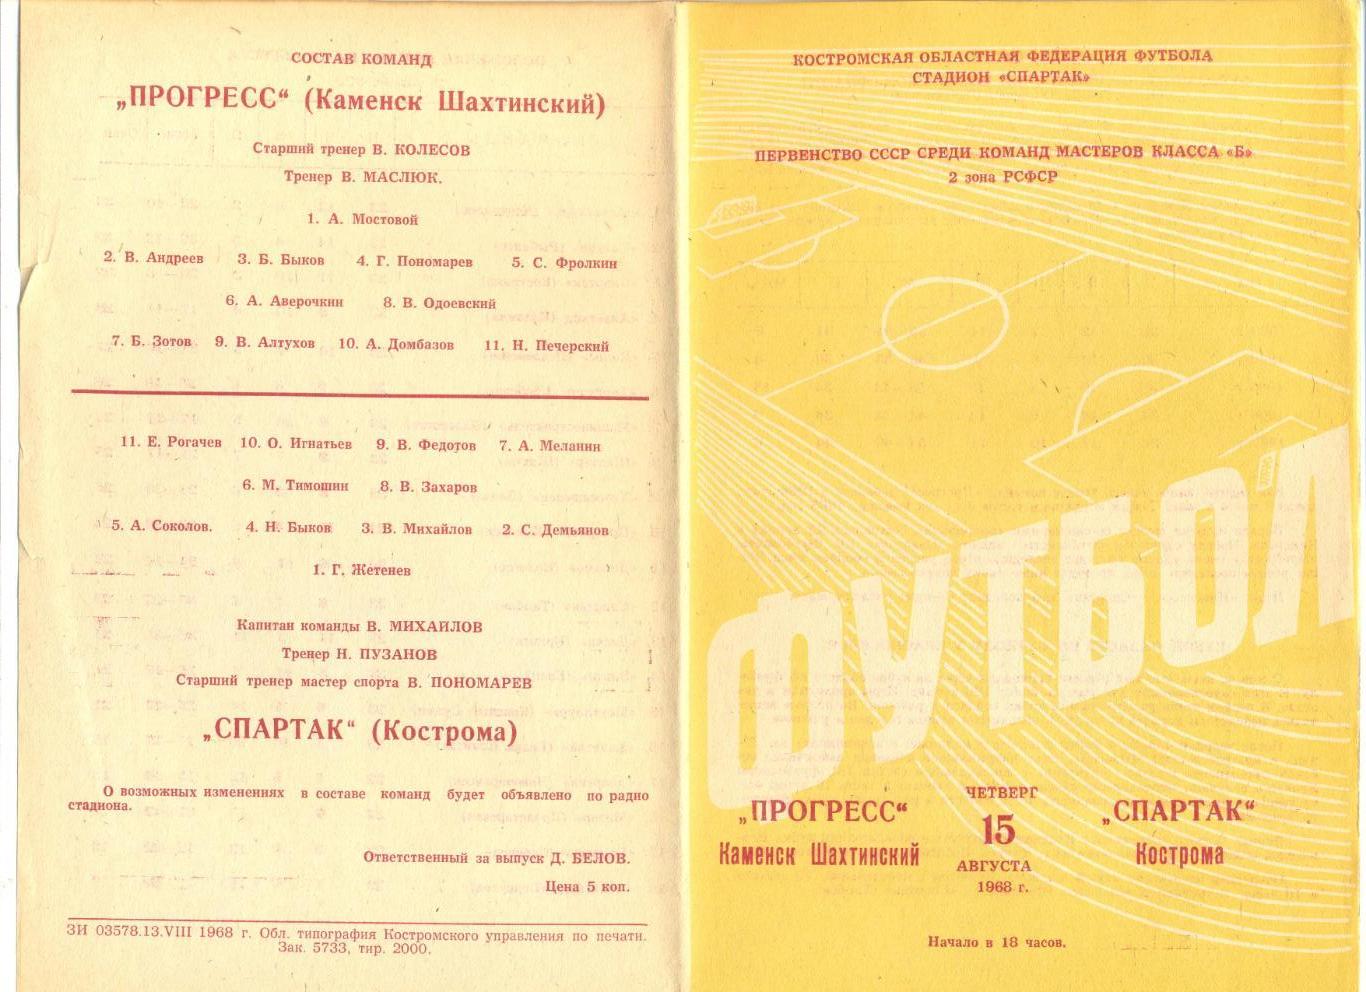 Спартак Кострома - Прогресс Каменск Шахтинский 15.08.1968 г.